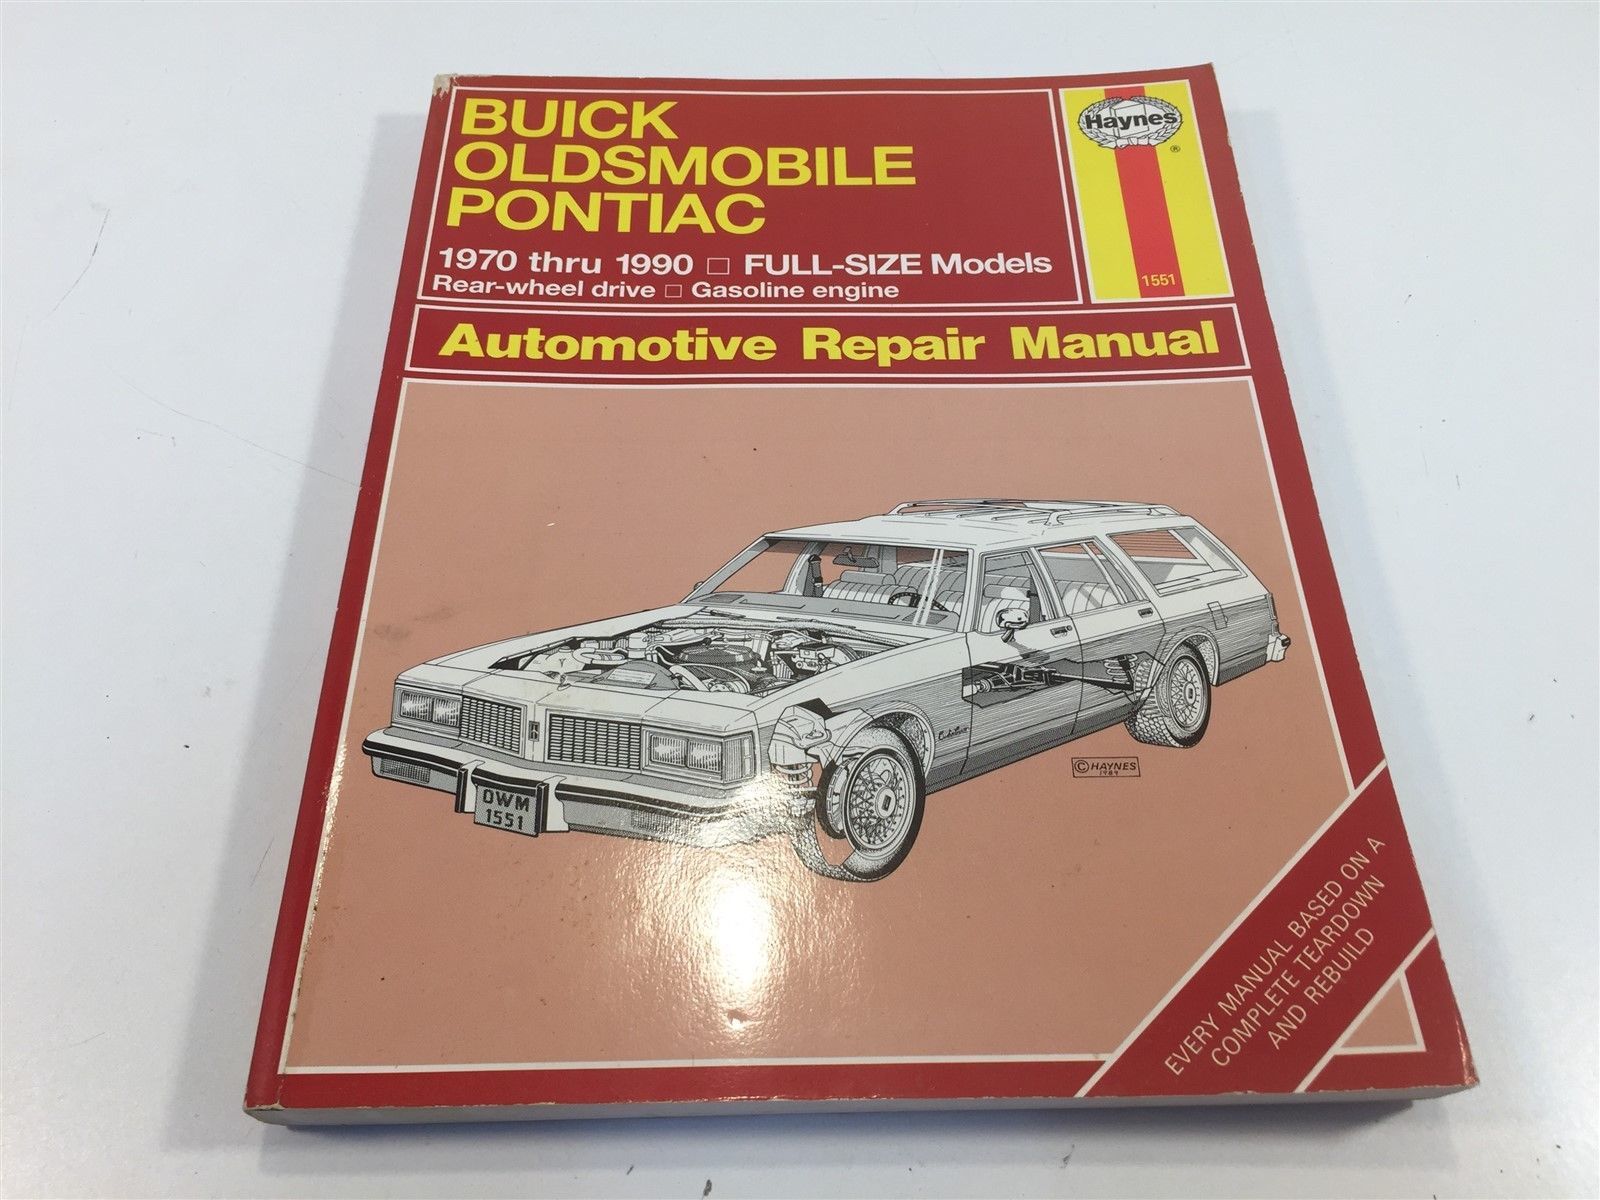 1970-1990 Buick Olds Pontiac Full Size Models Automotive Repair Manual Haynes - $14.99